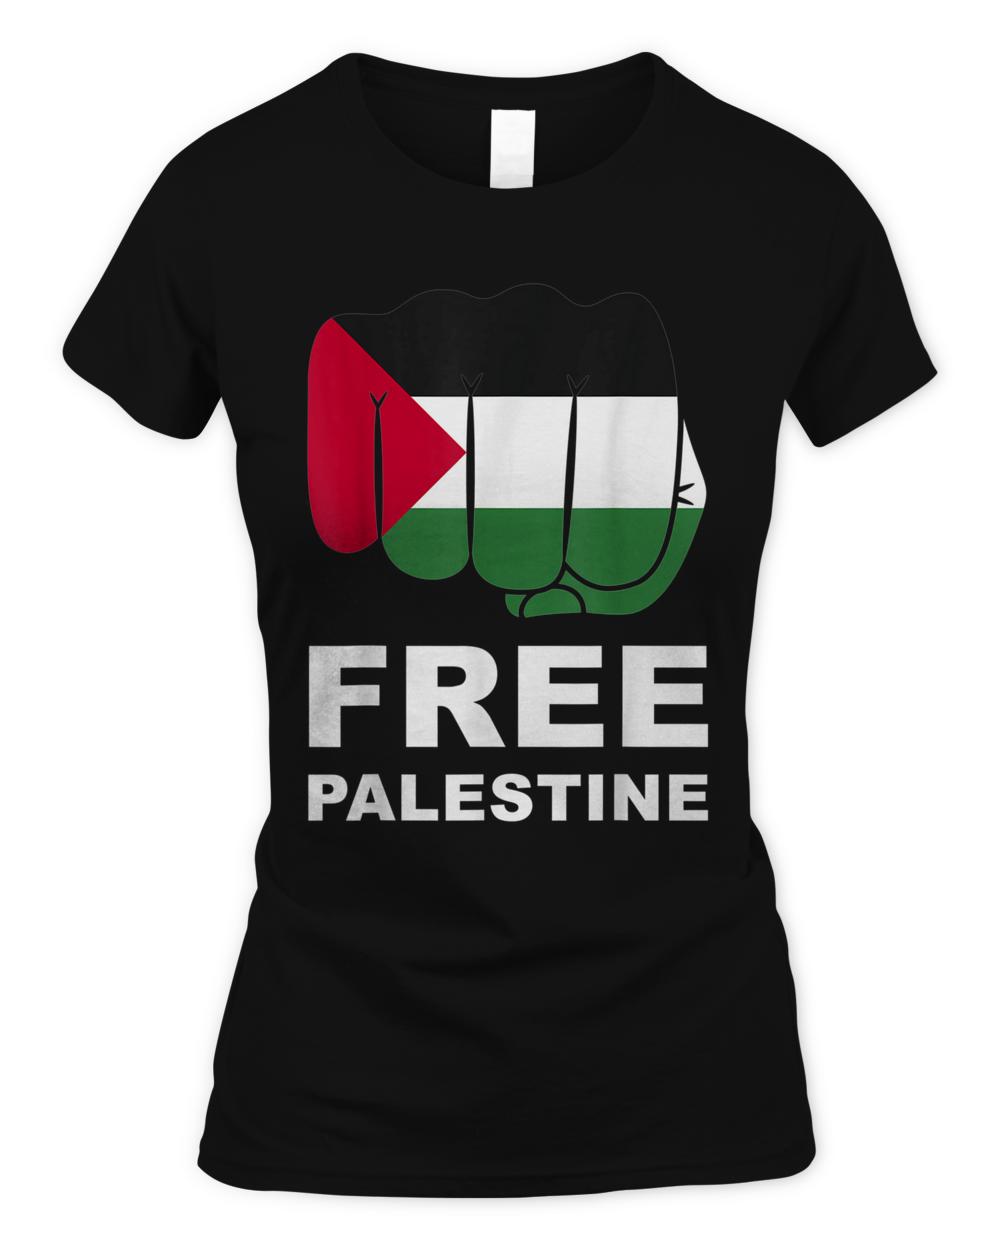 Premium free palestine palestine flag gift  t-shirt